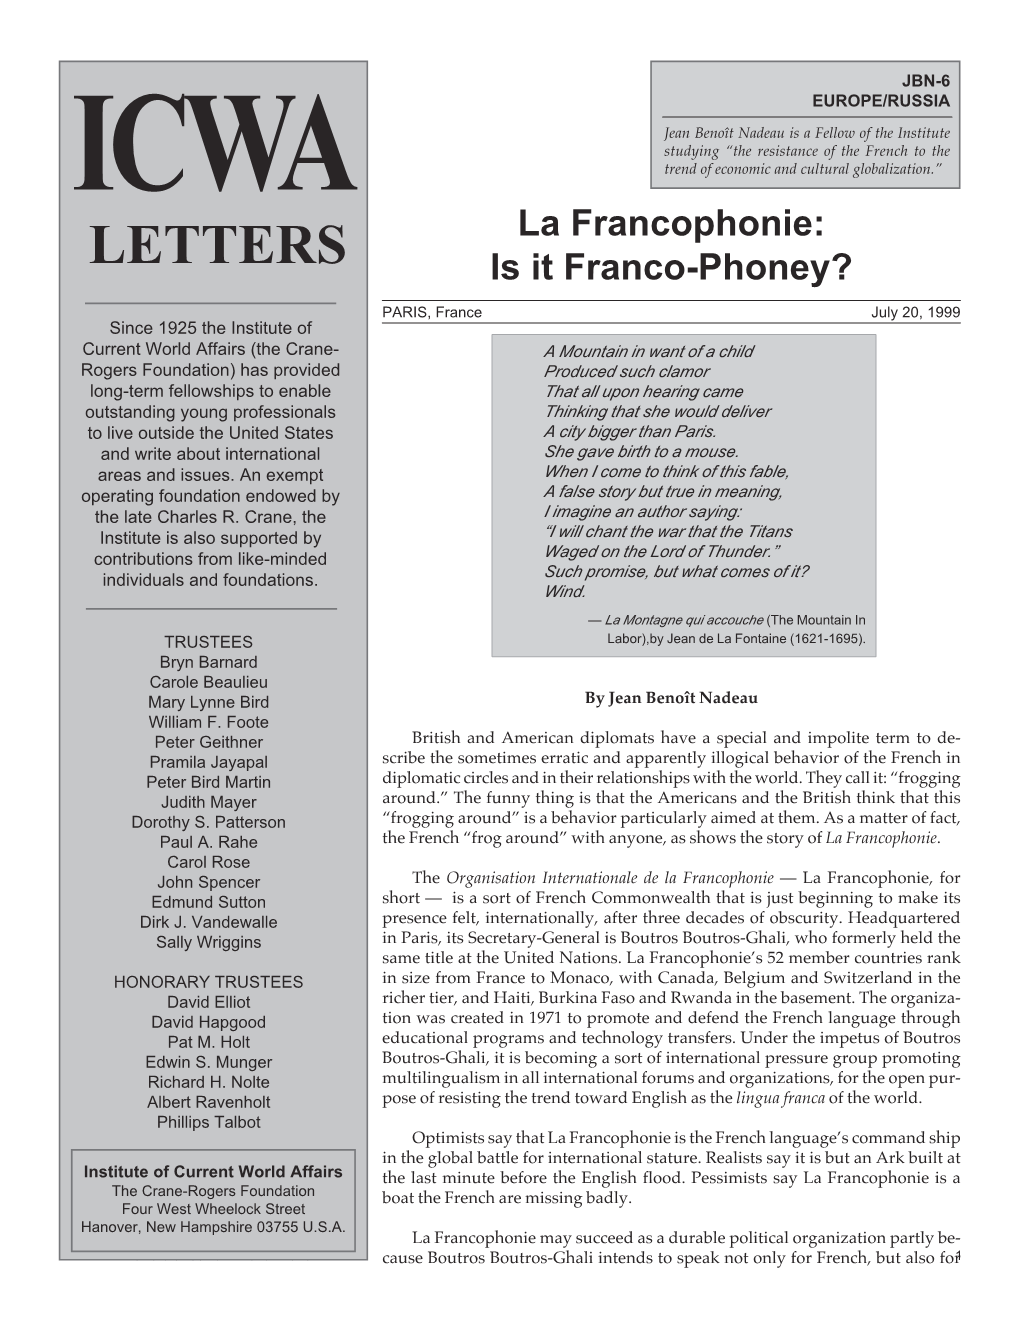 La Francophonie:|Is It Franco-Phoney?